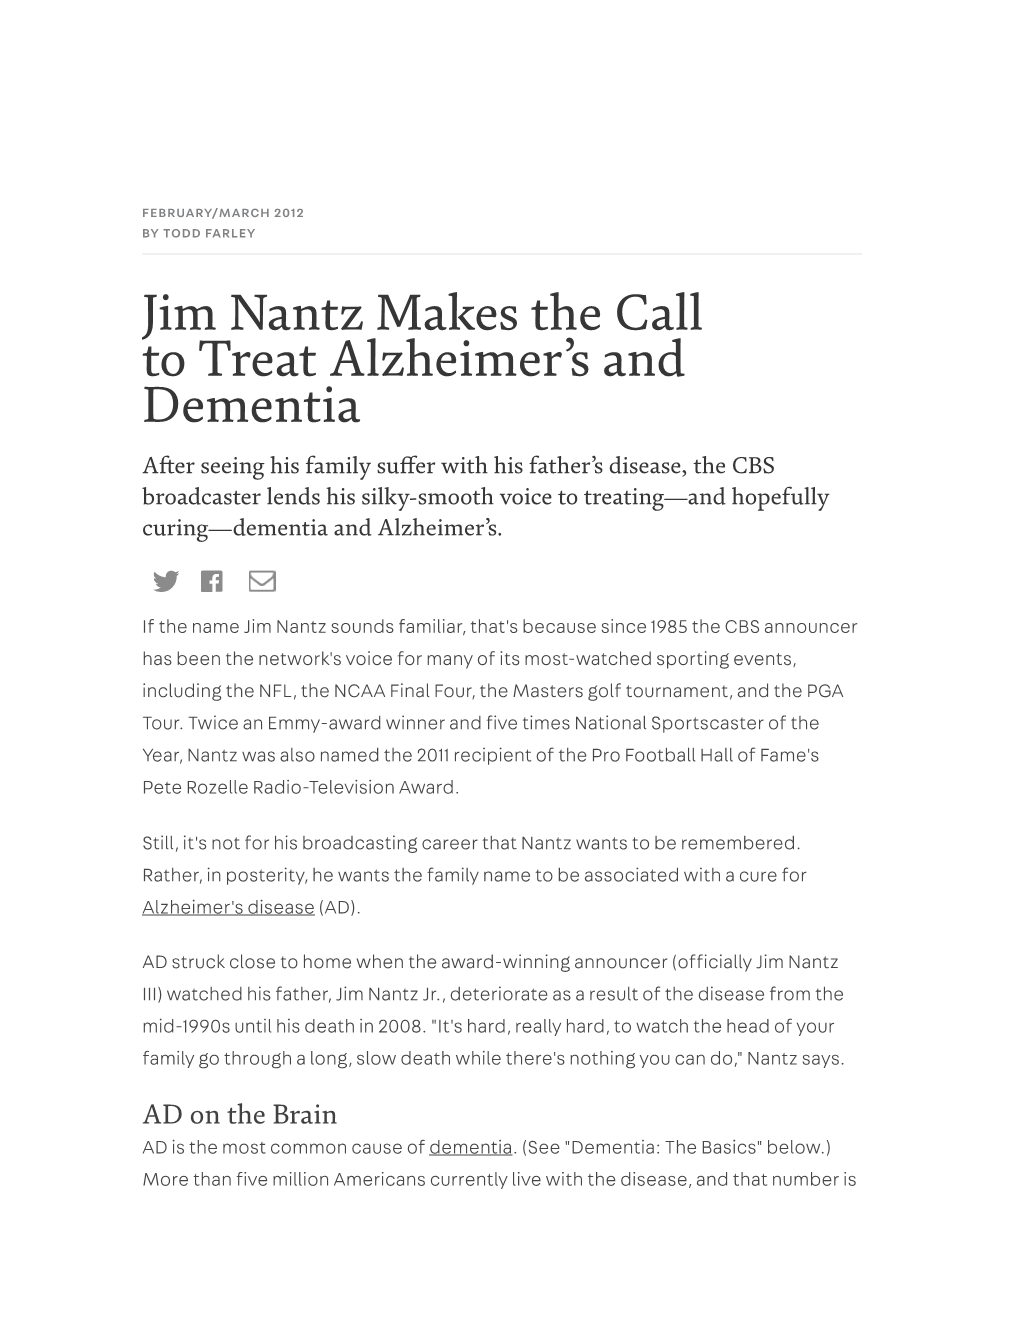 Jim Nantz Makes the Call to Treat Alzheimer's and Dementia